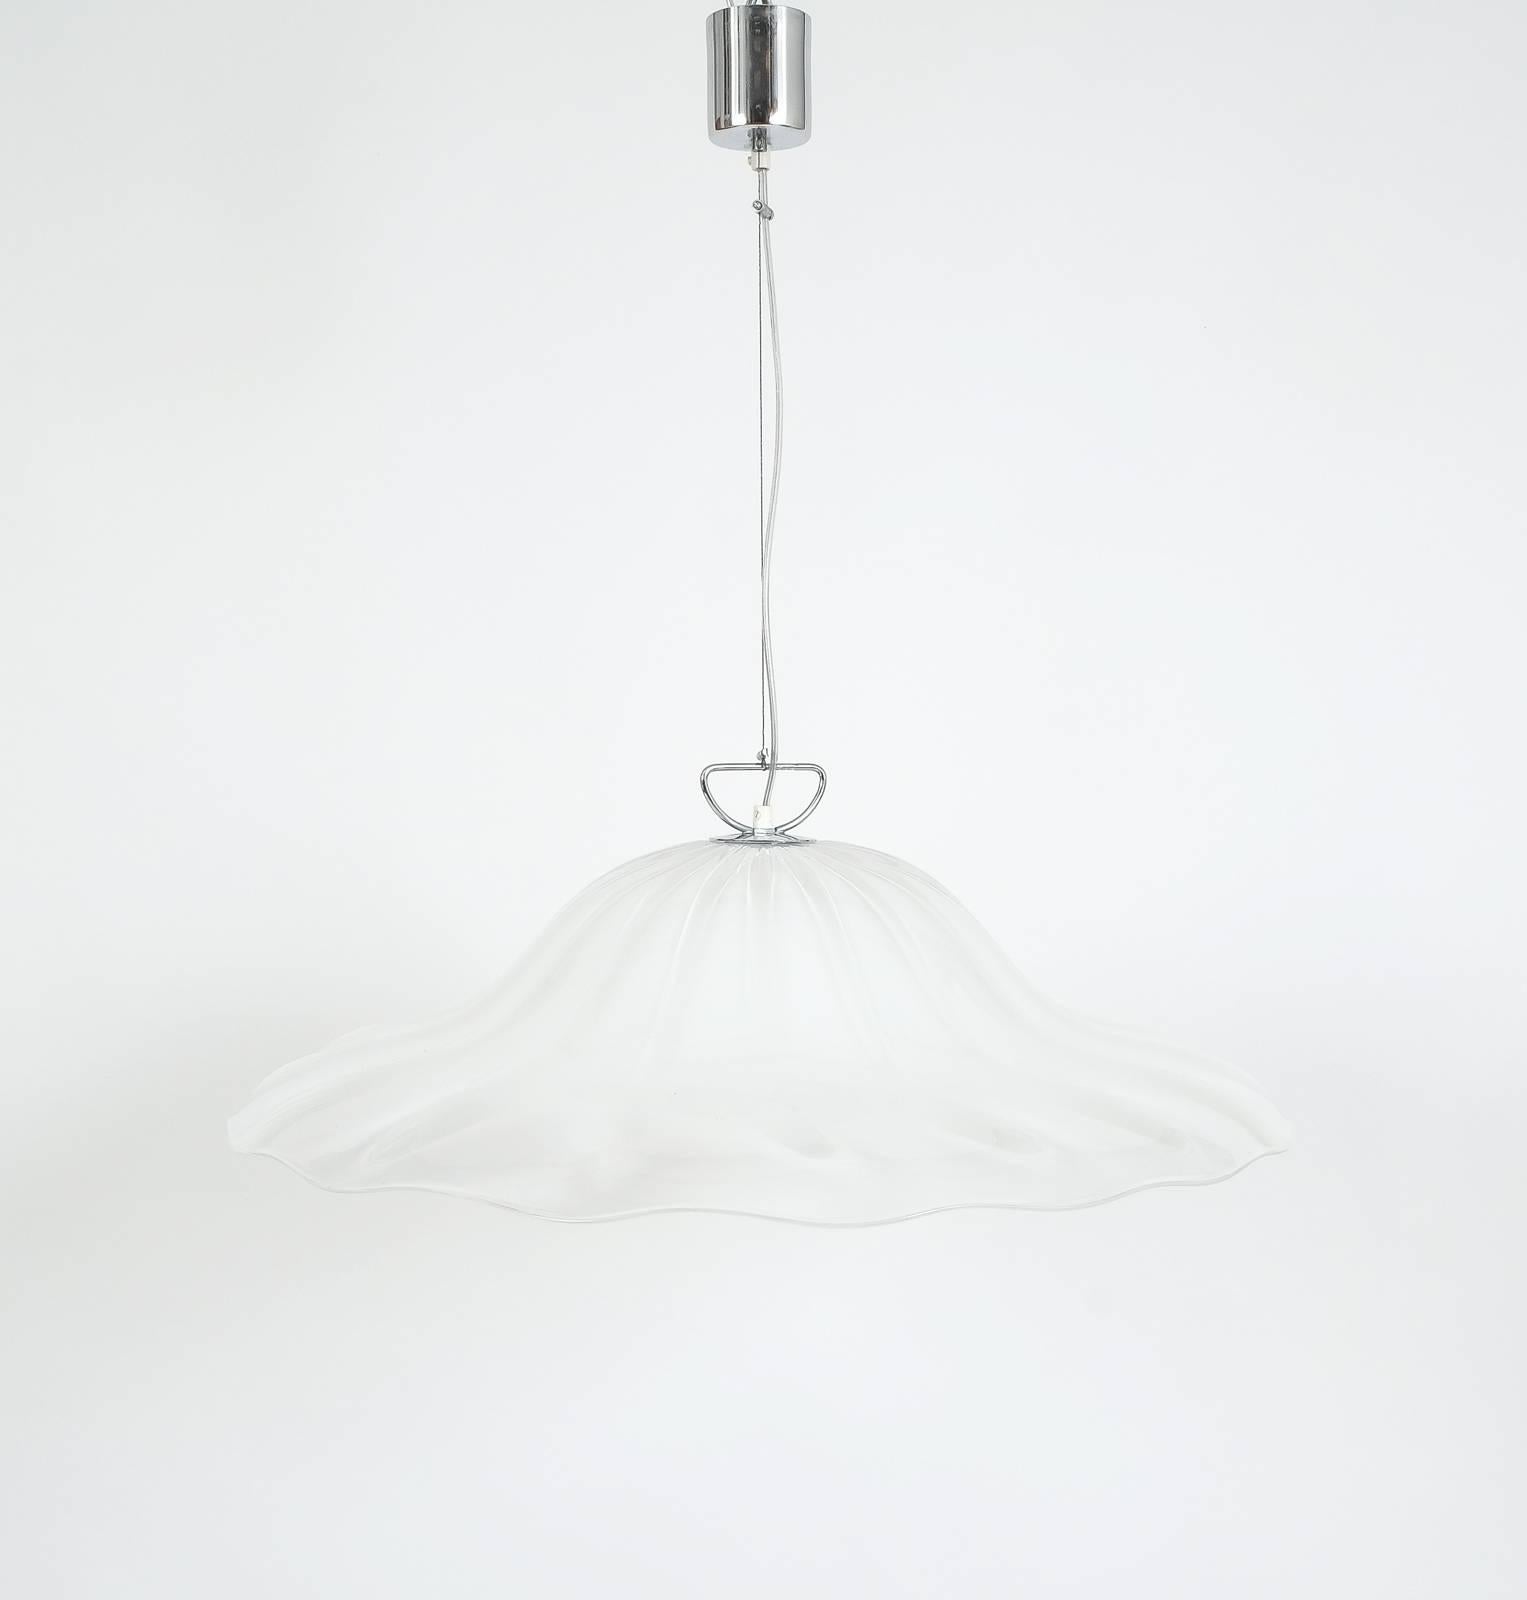 J.T Kalmar Large Kiriglas Glass Pendant Lamp Ceiling Light, Austria circa 1965. Large 26